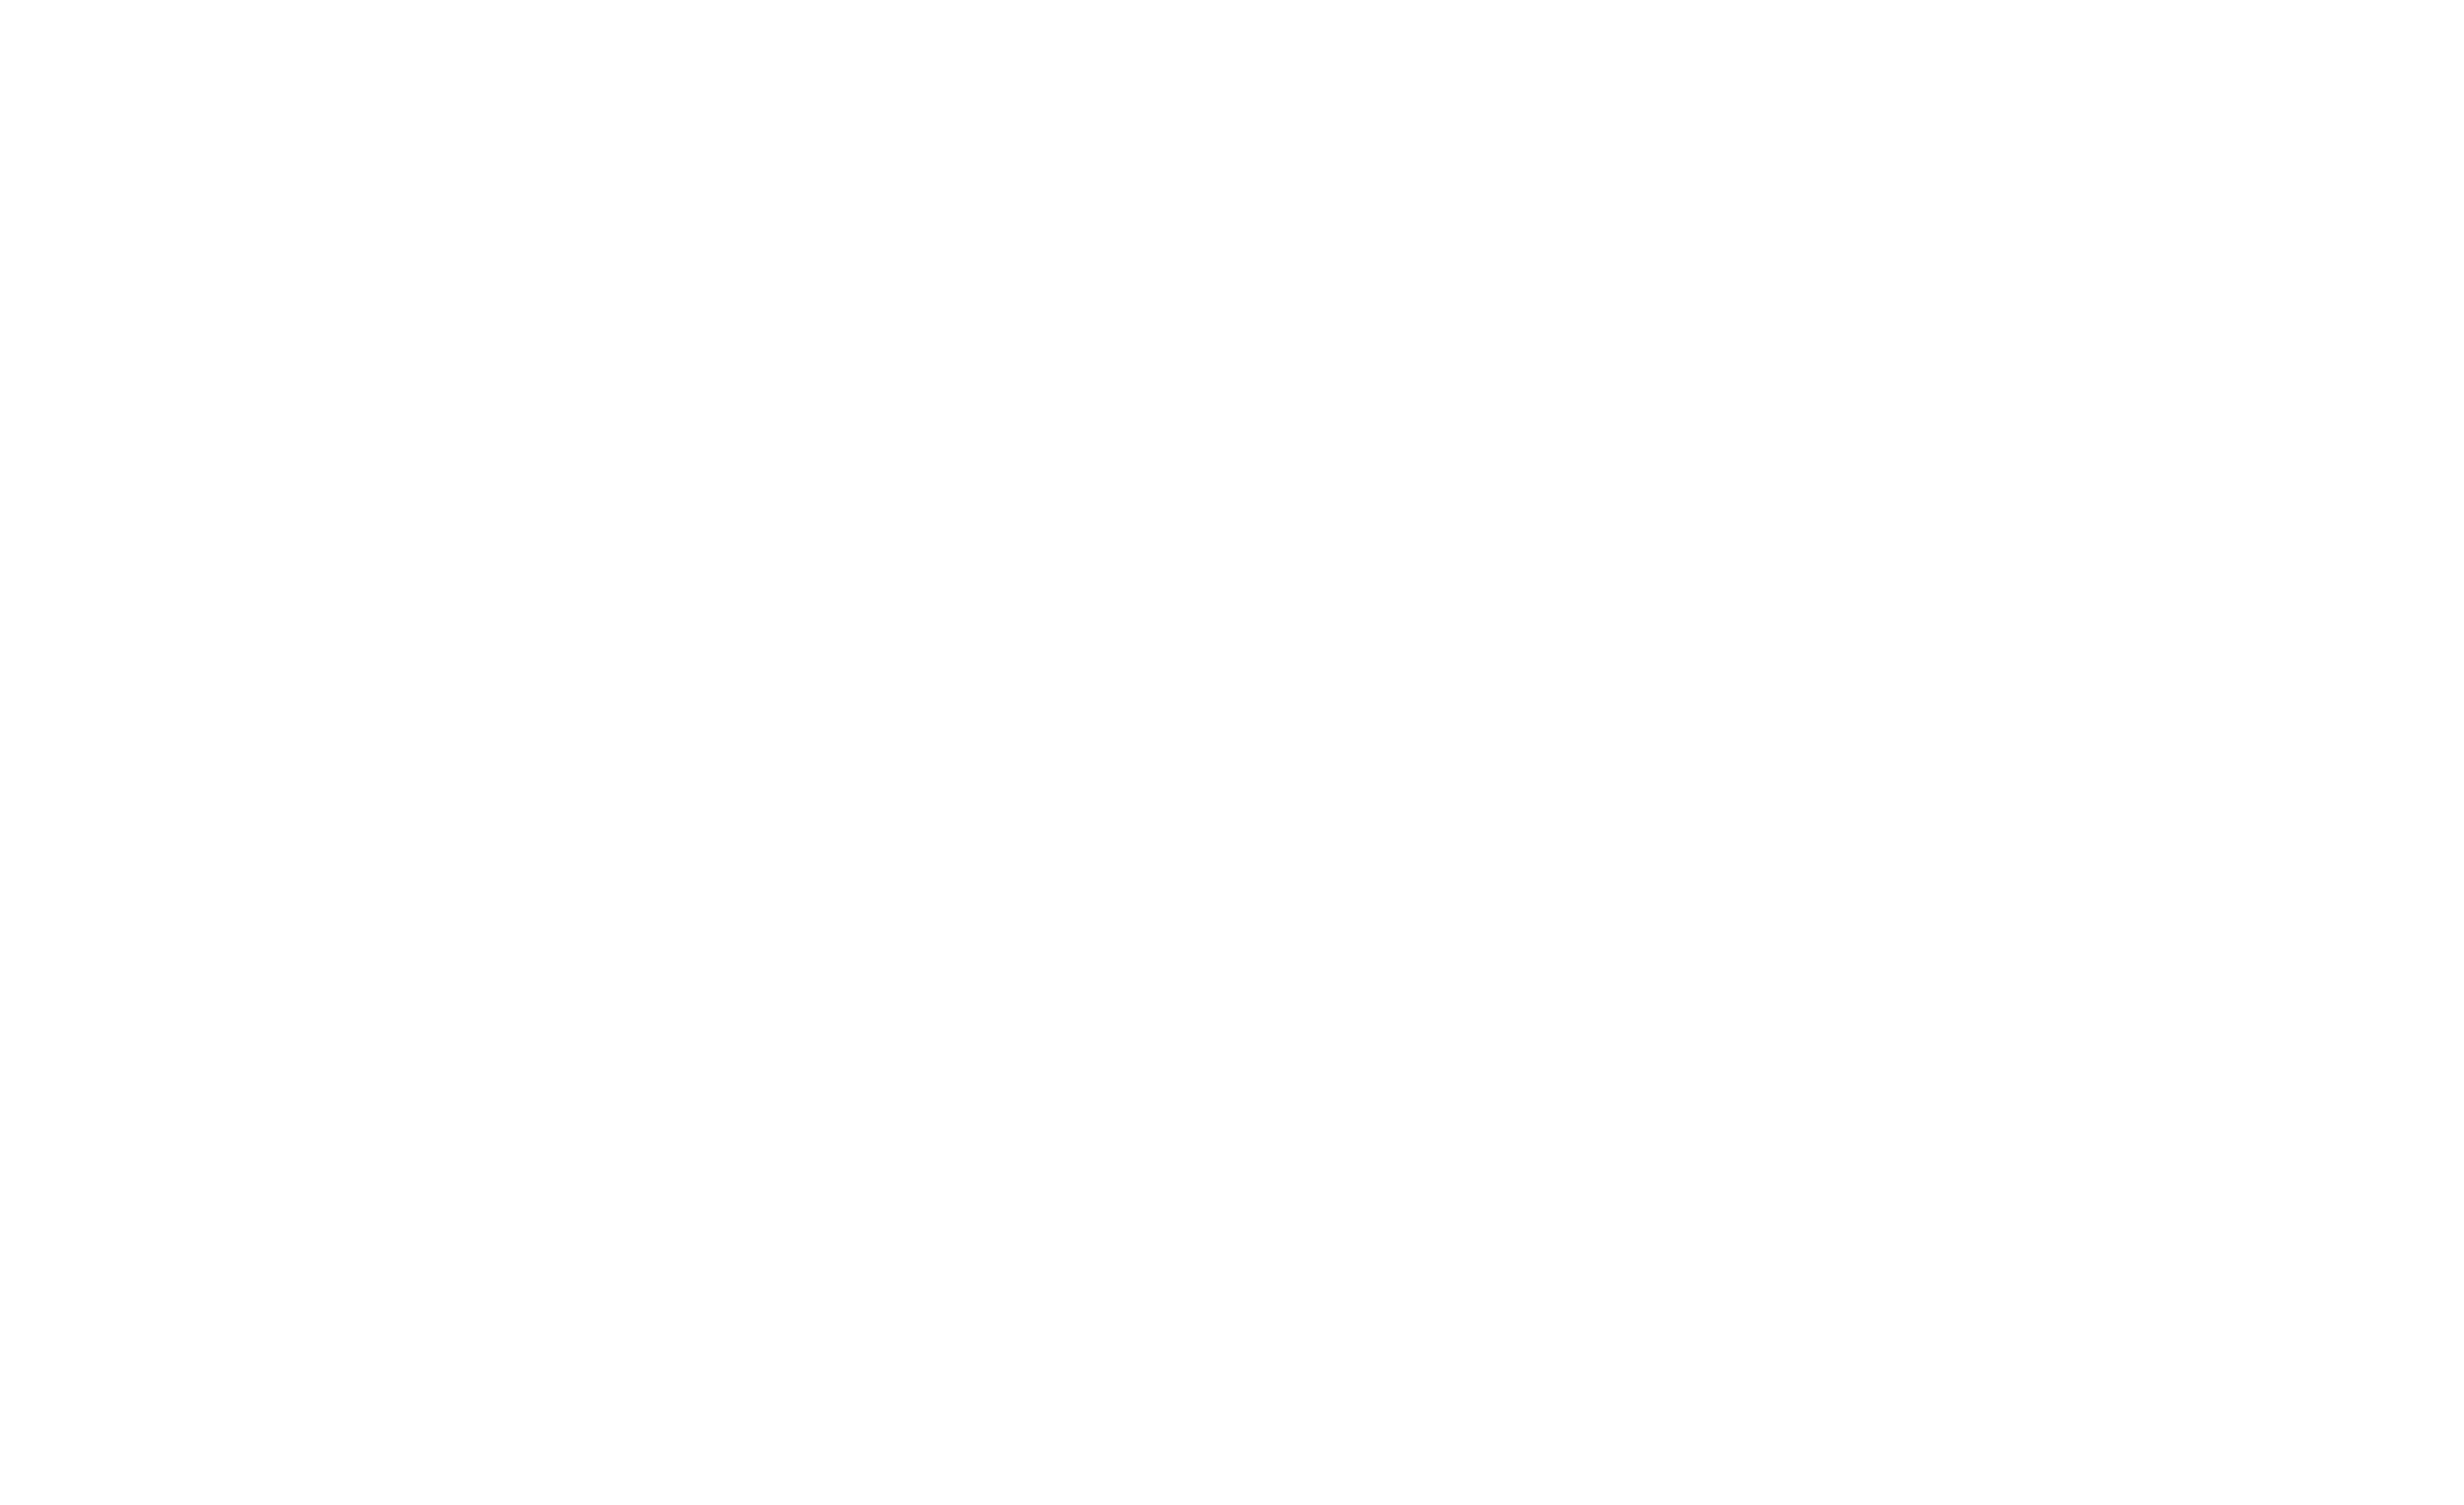 Na Fir Bolg logo